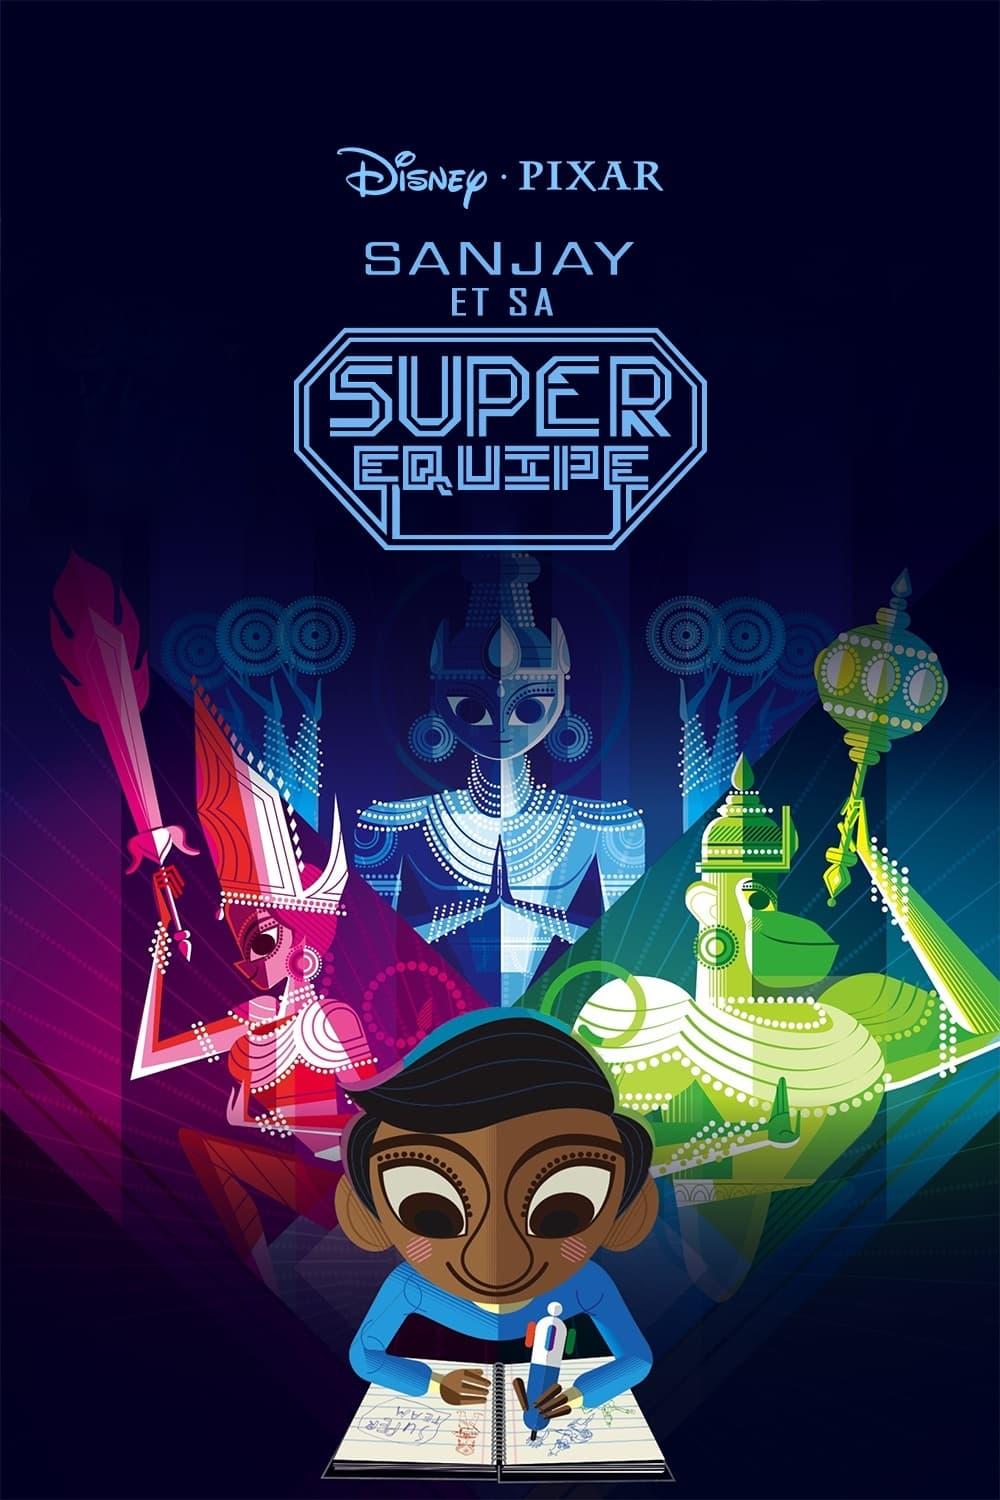 Sanjay's Super Team poster